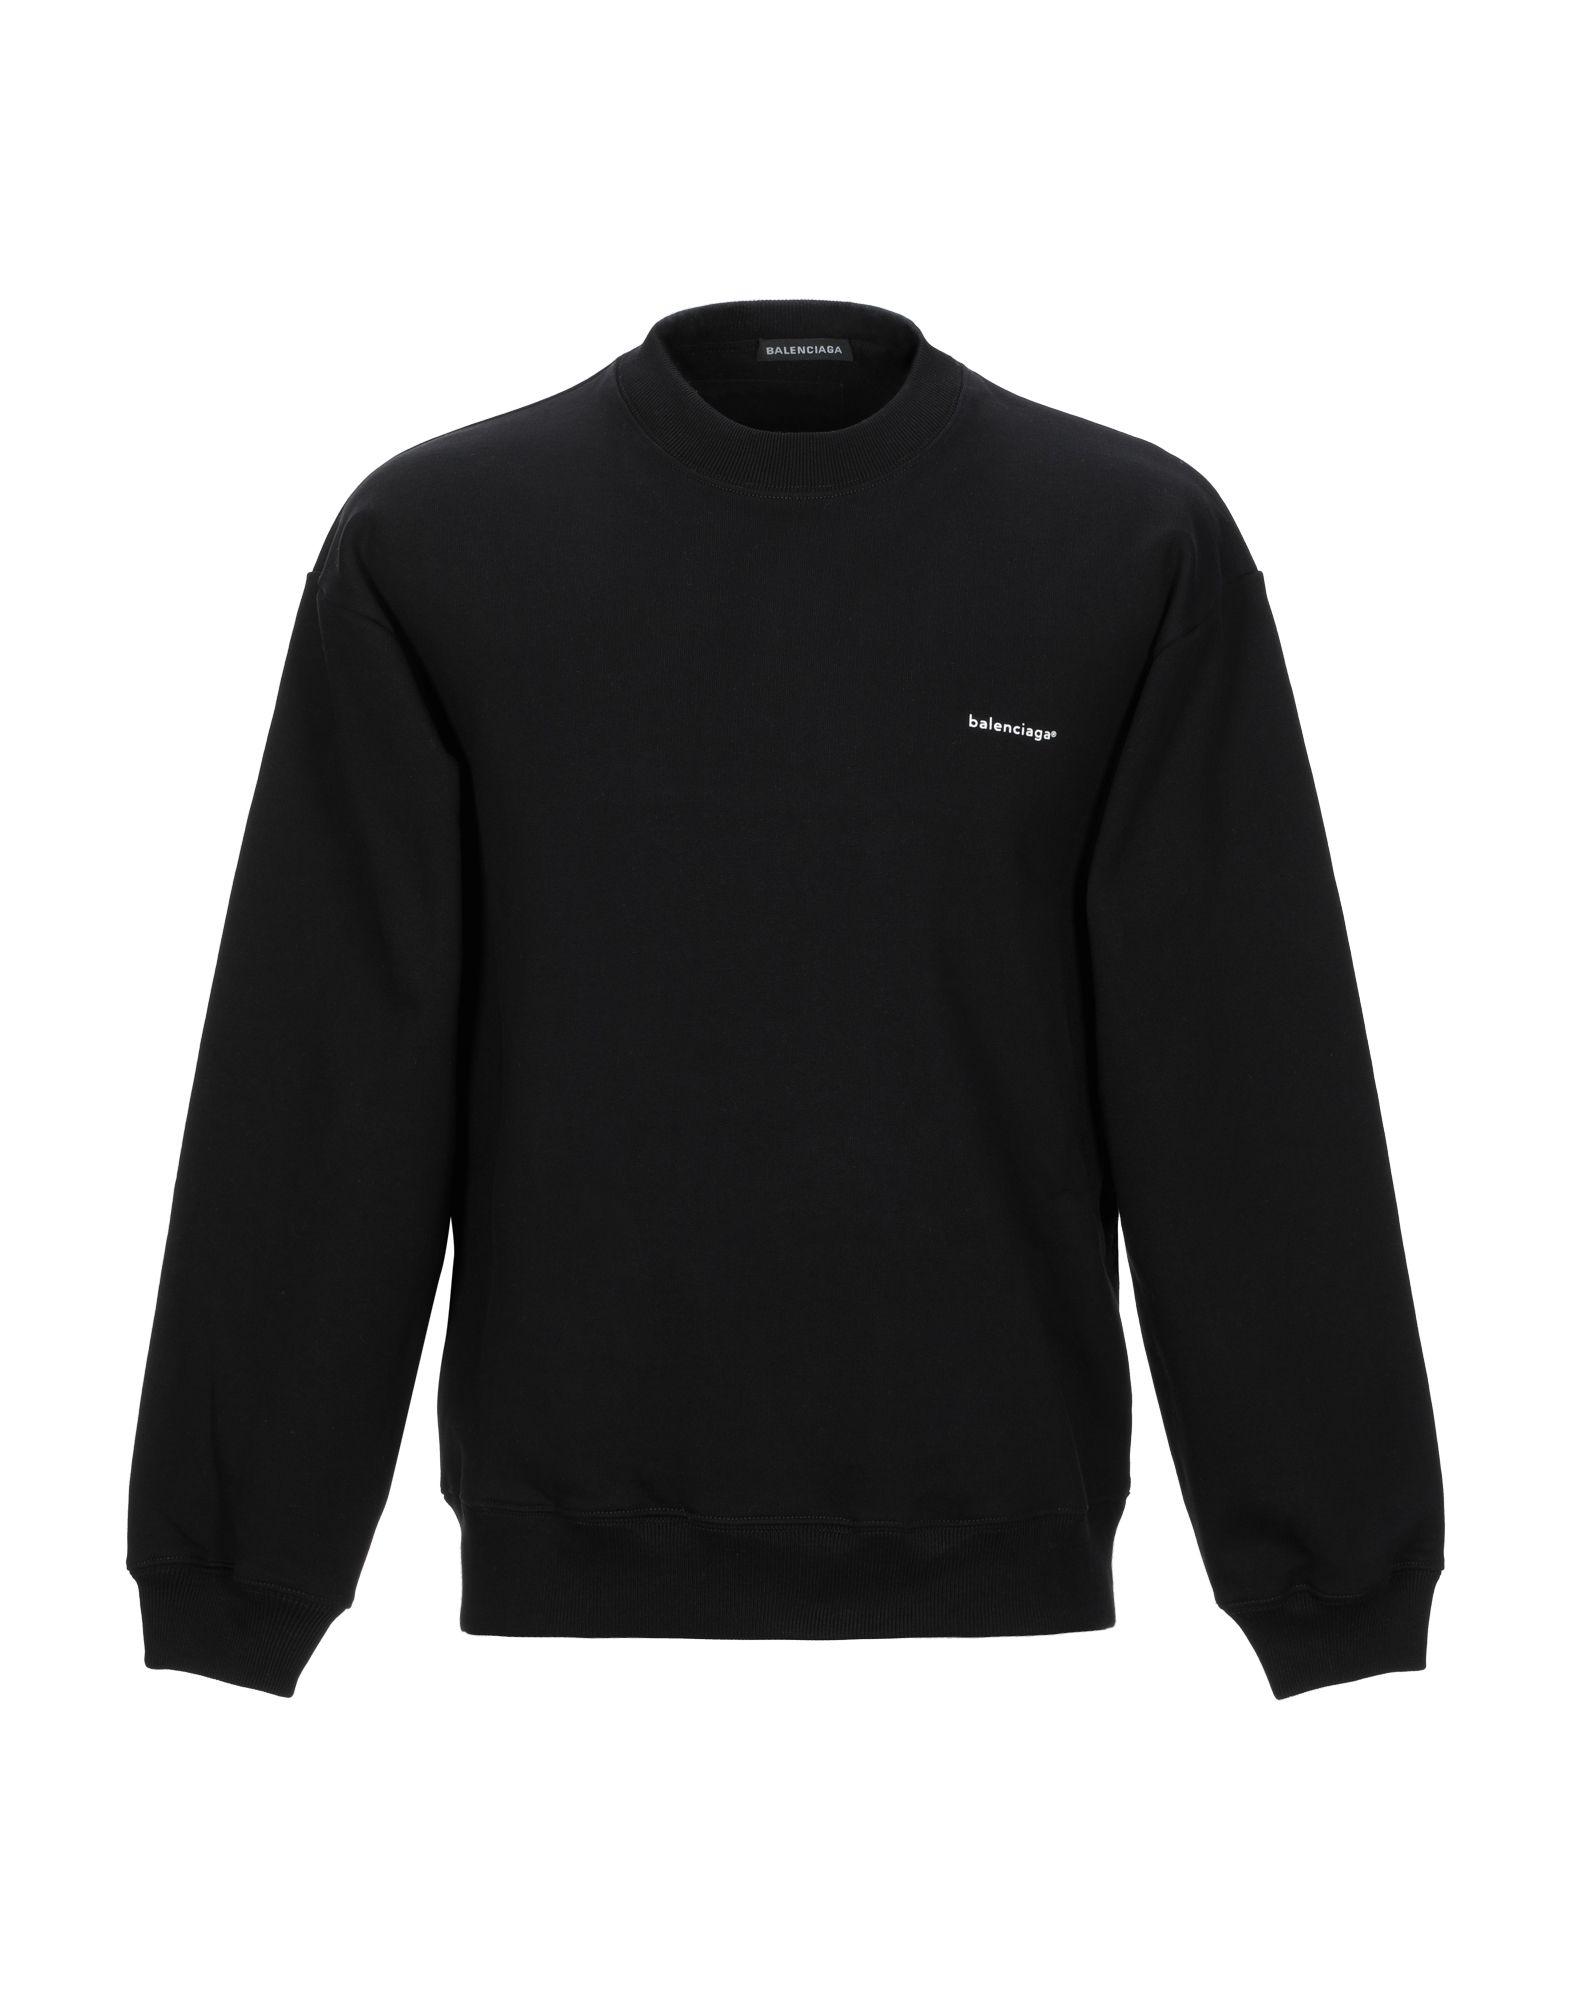 Balenciaga Cotton Sweatshirt in Black for Men - Lyst